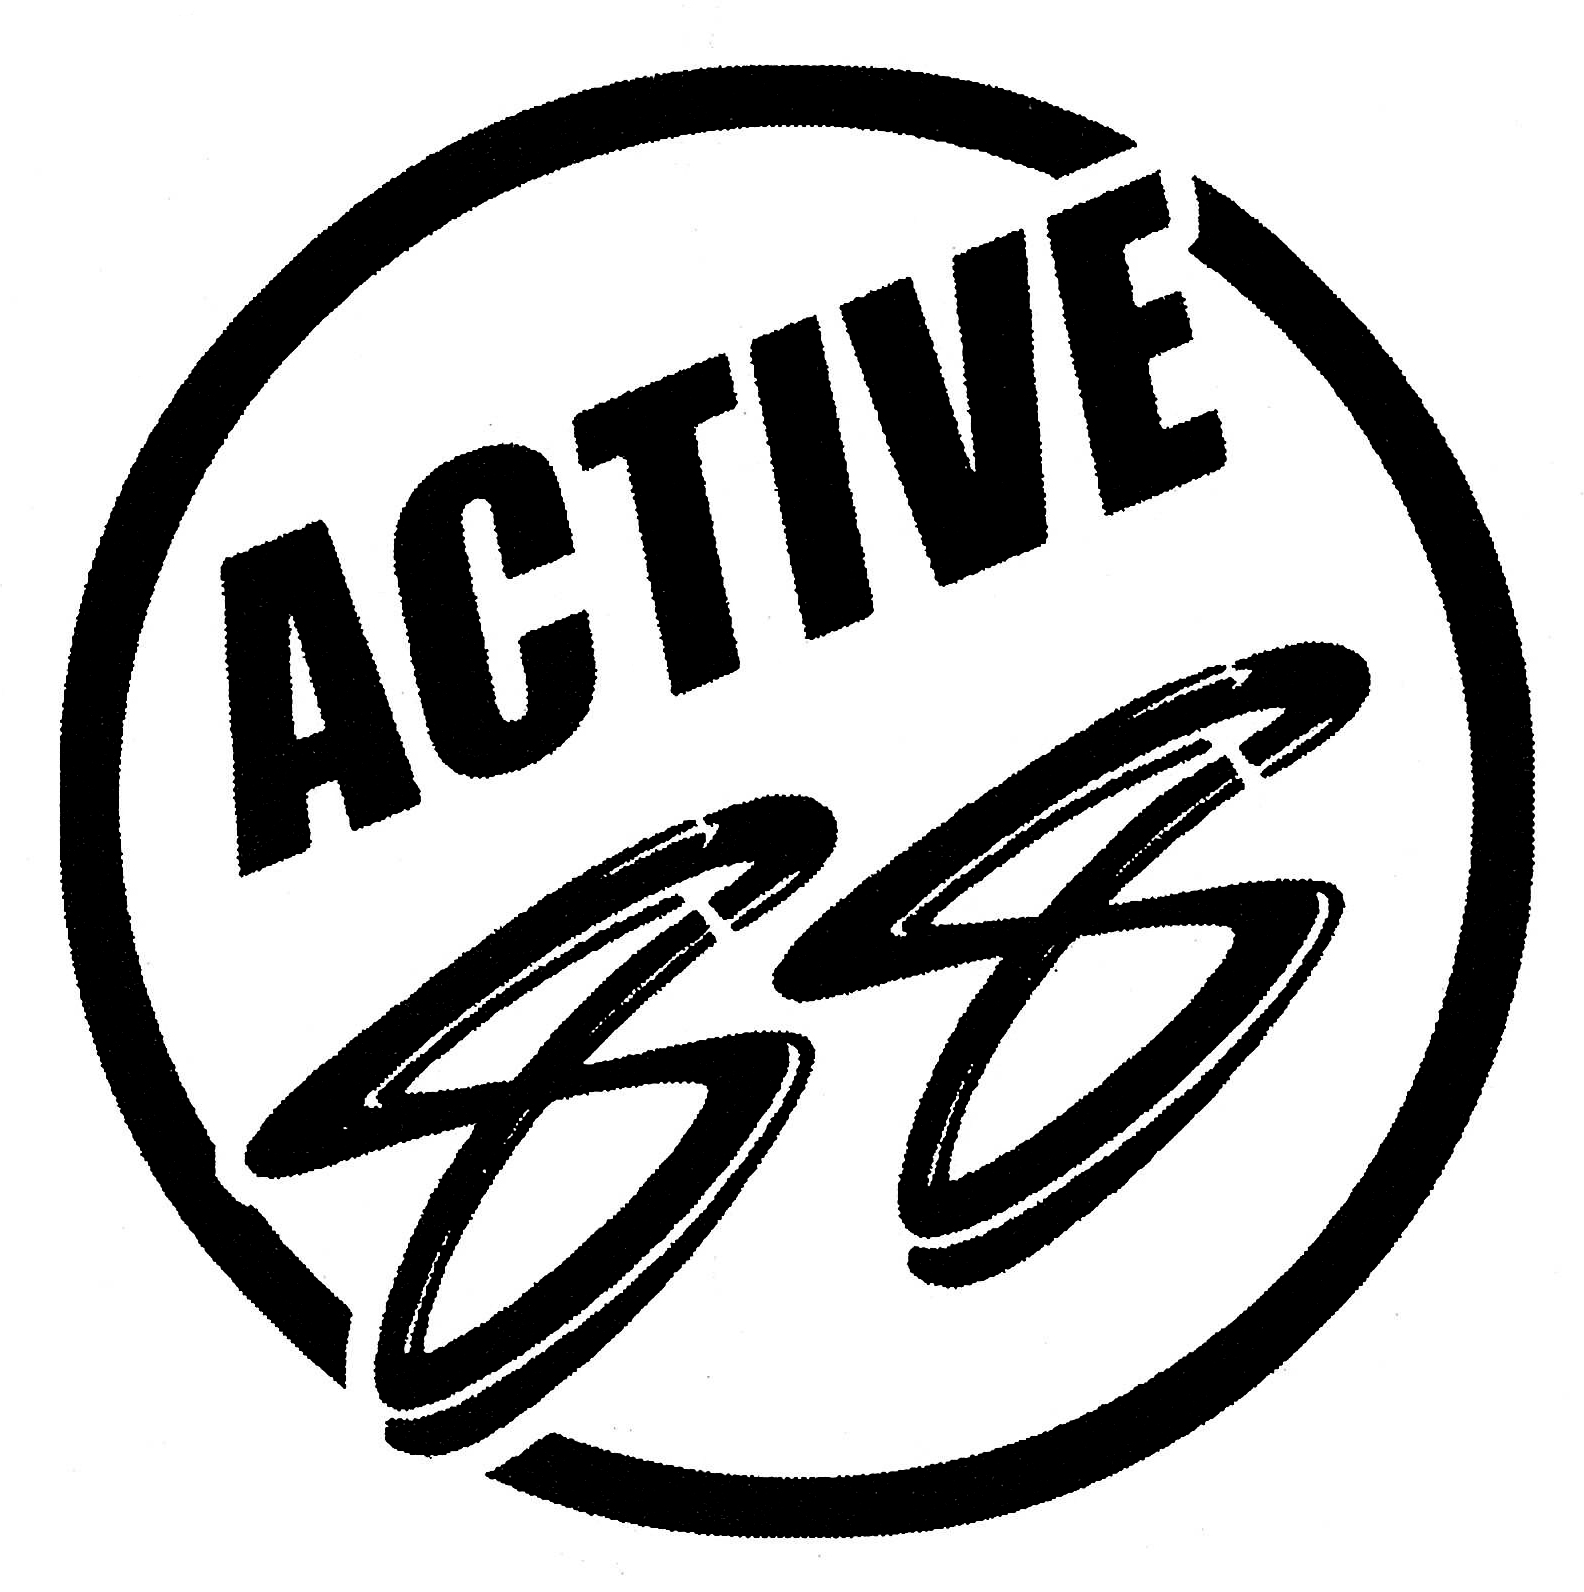 Sponsor Active Imprint and Active 88